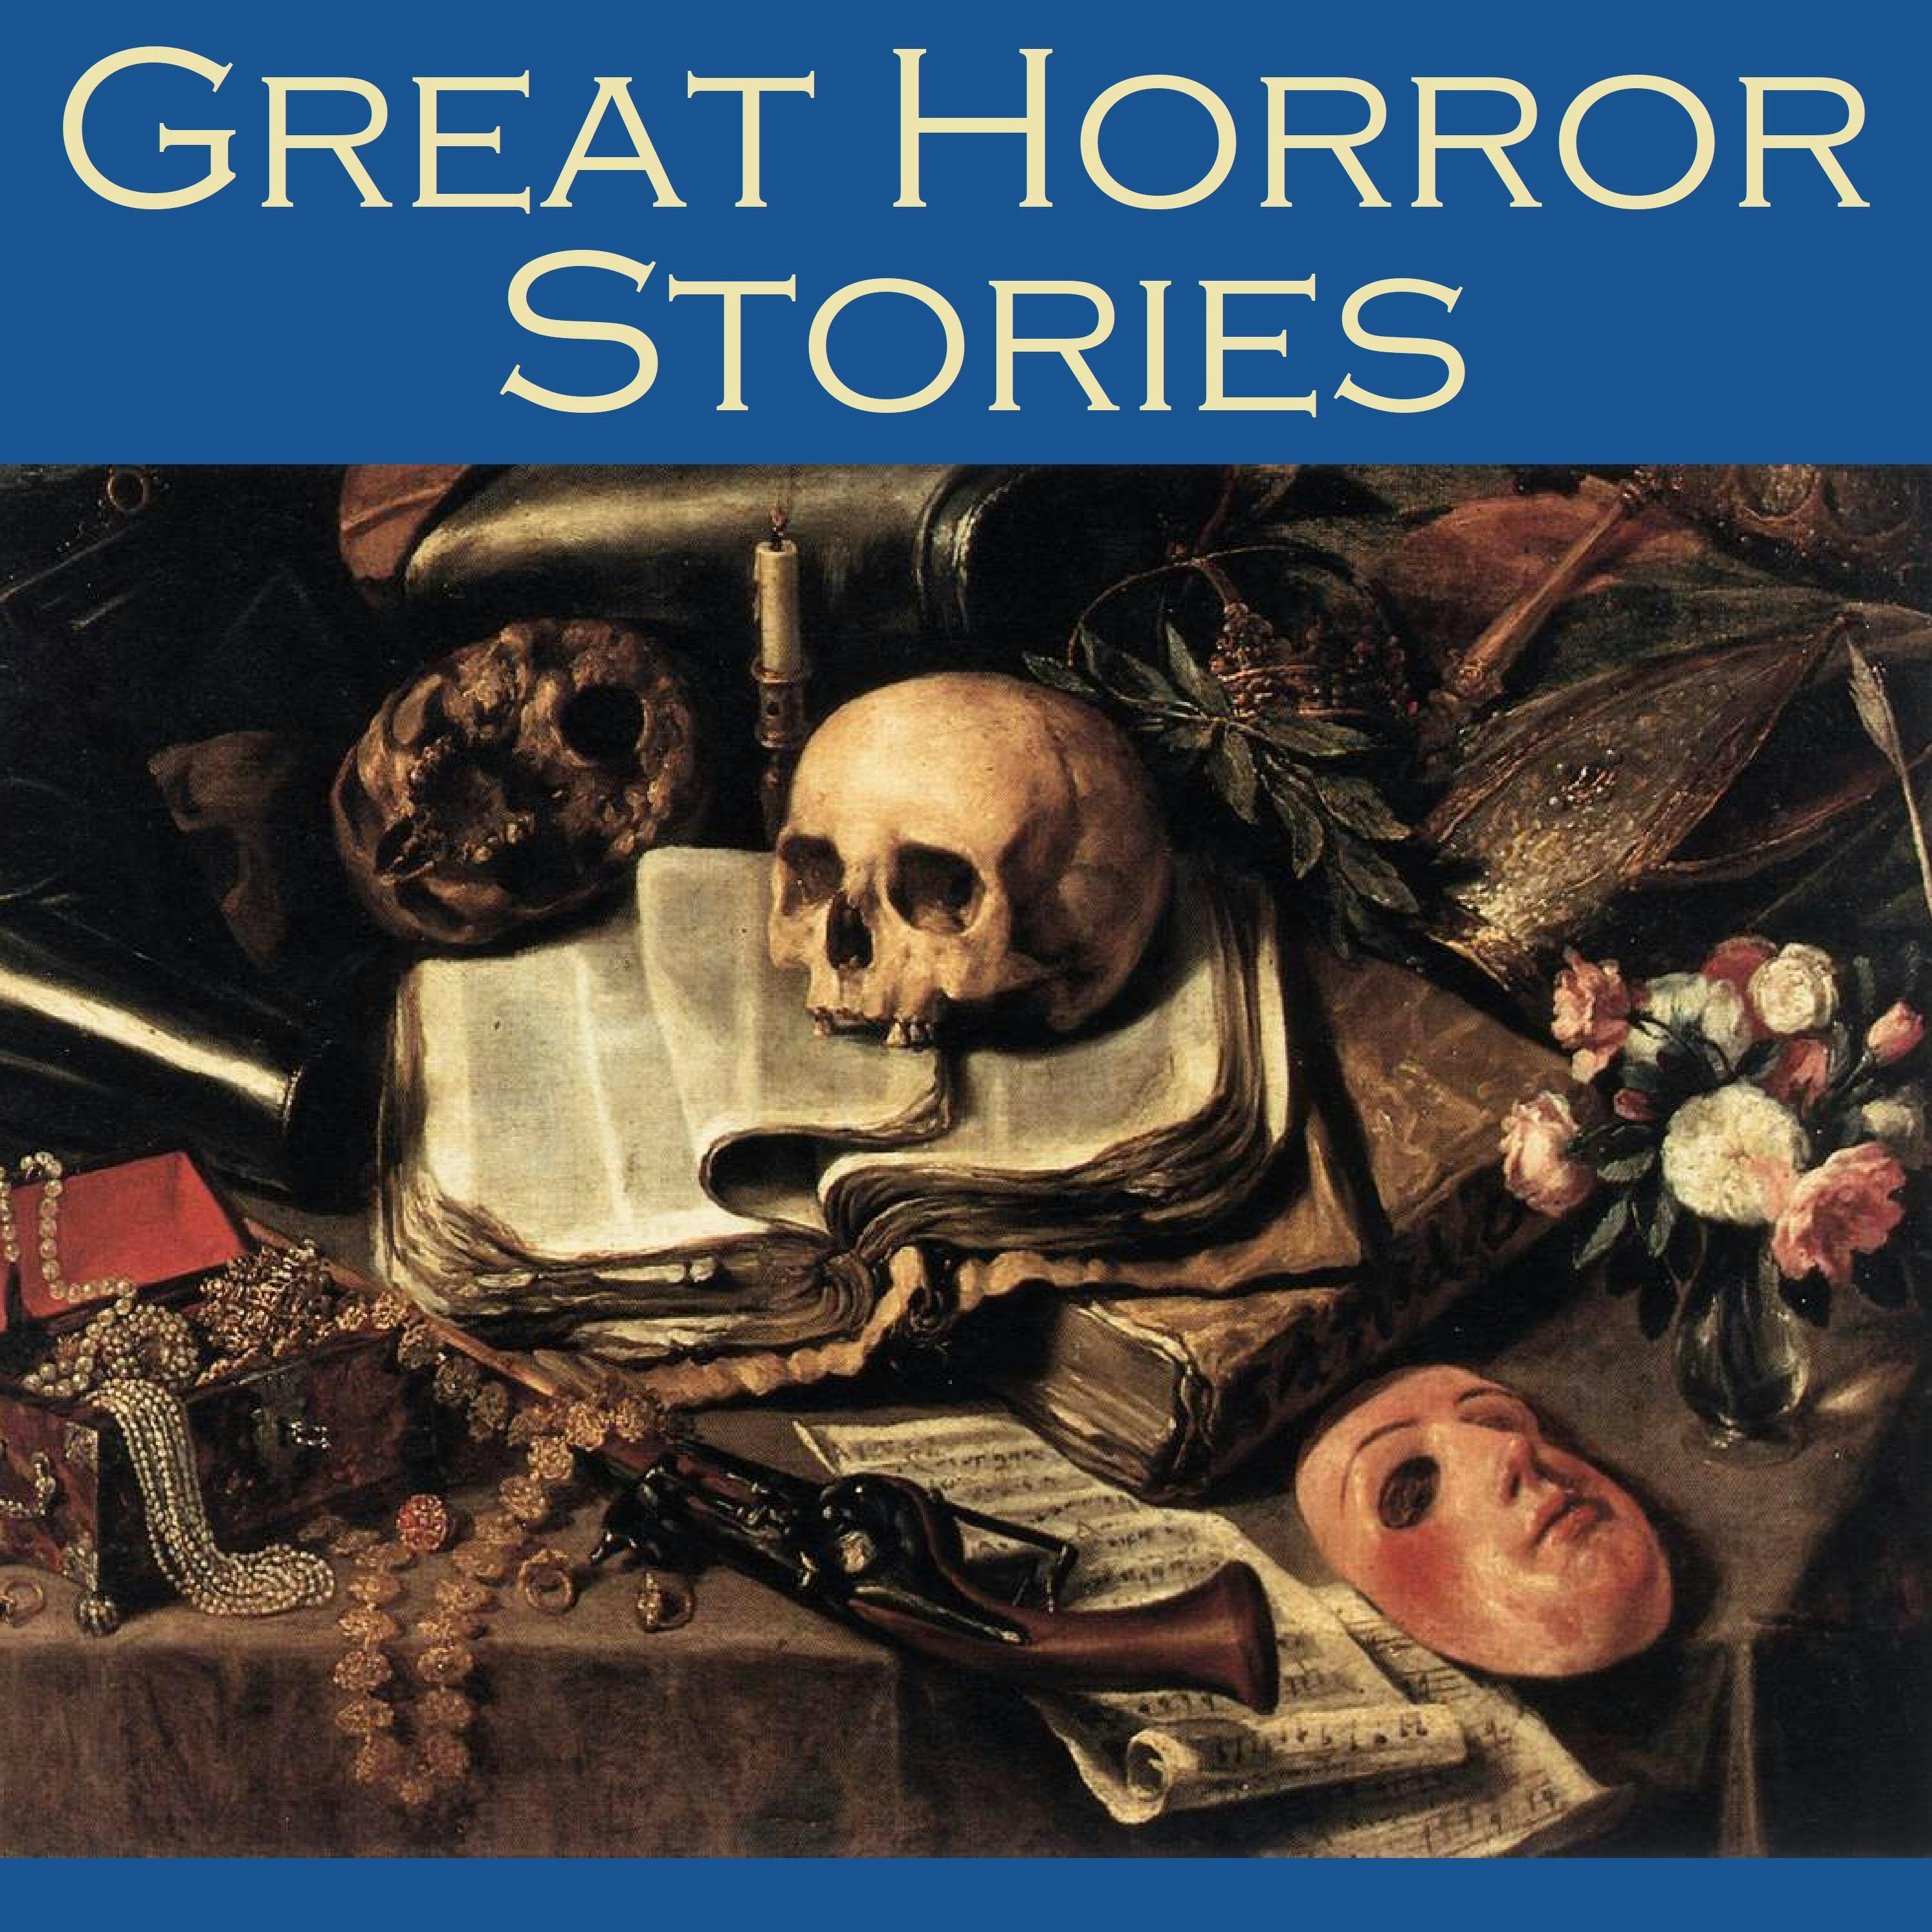 Great Horror Stories - Robert Louis Stevenson, Edith Nesbit, Sir Arthur Conan Doyle